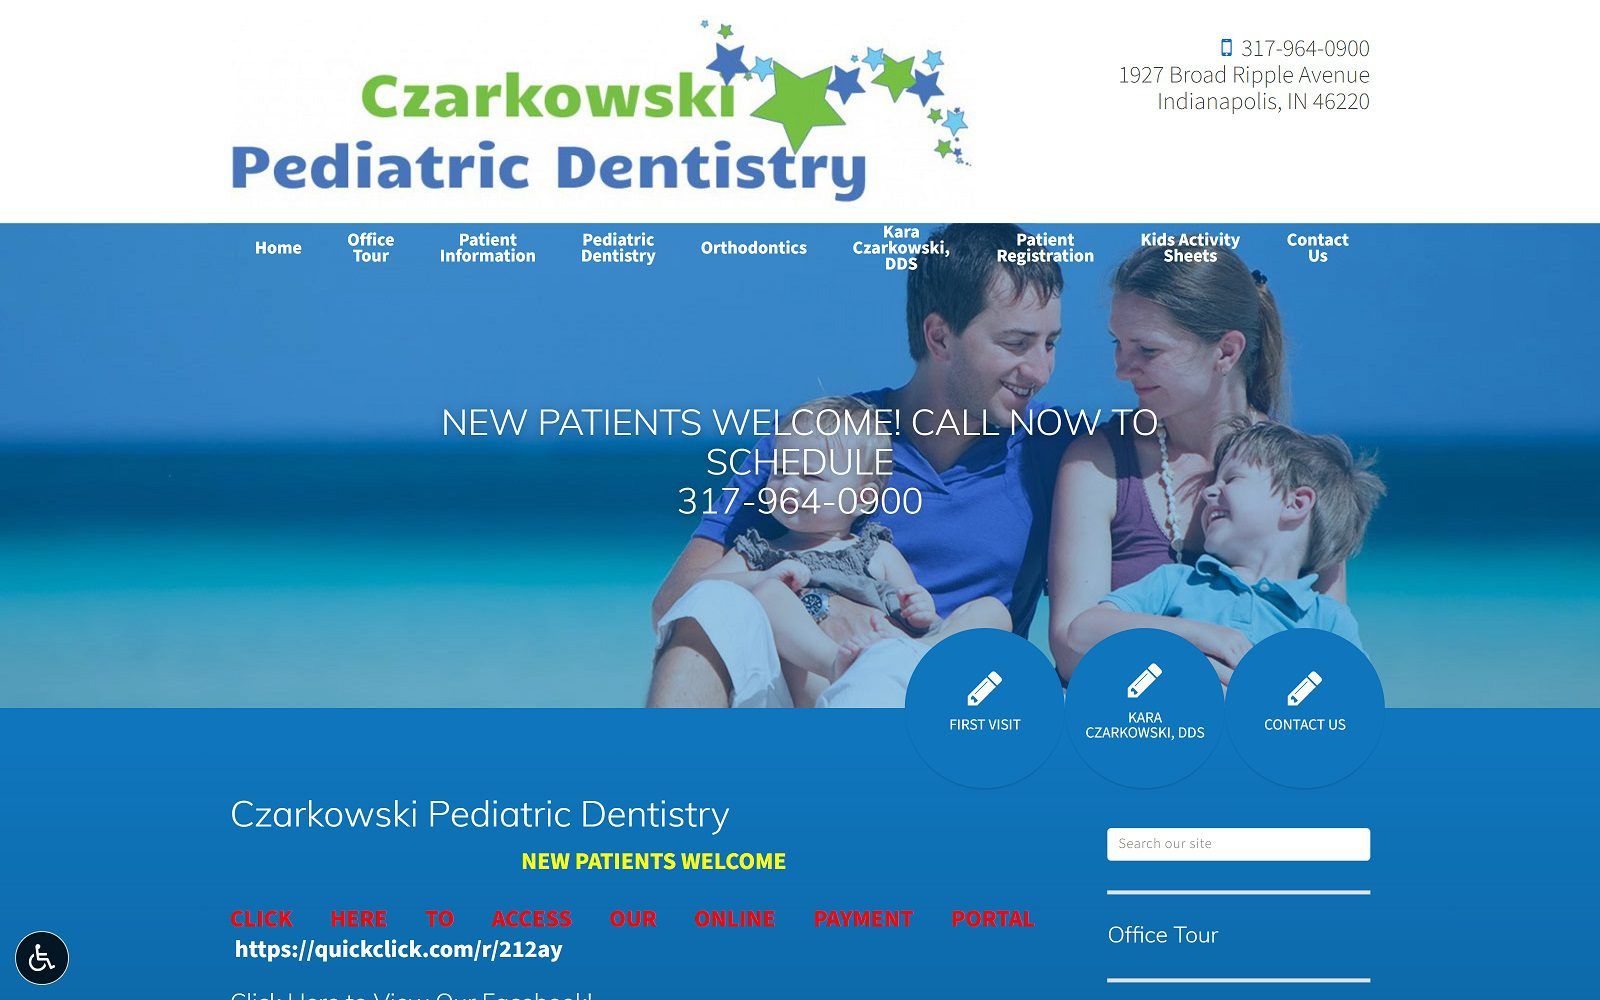 The screenshot of czarkowski pediatric dentistry website